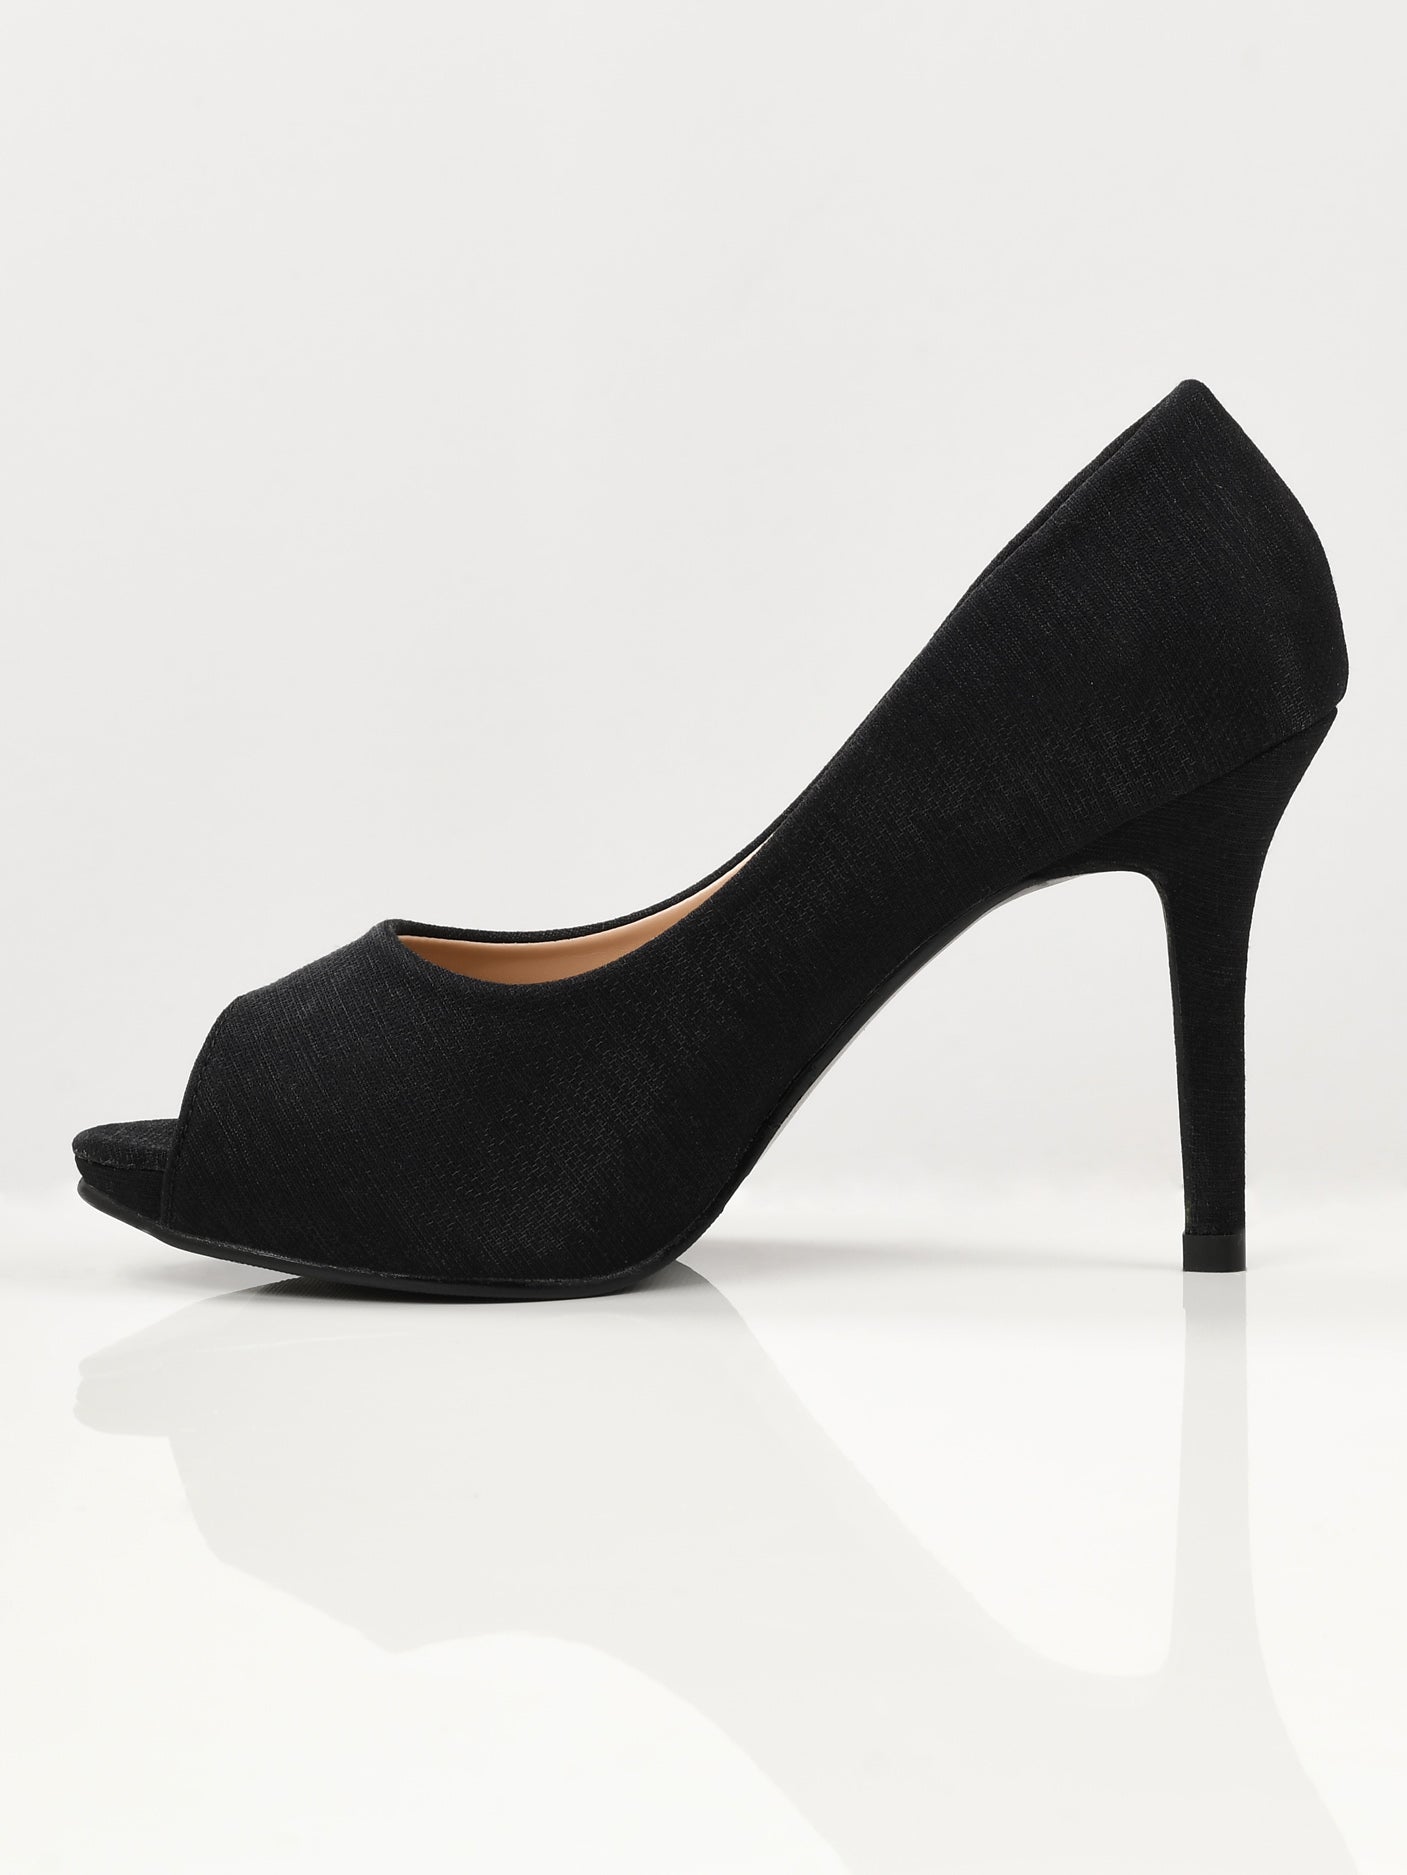 Shimmery Heels - Black